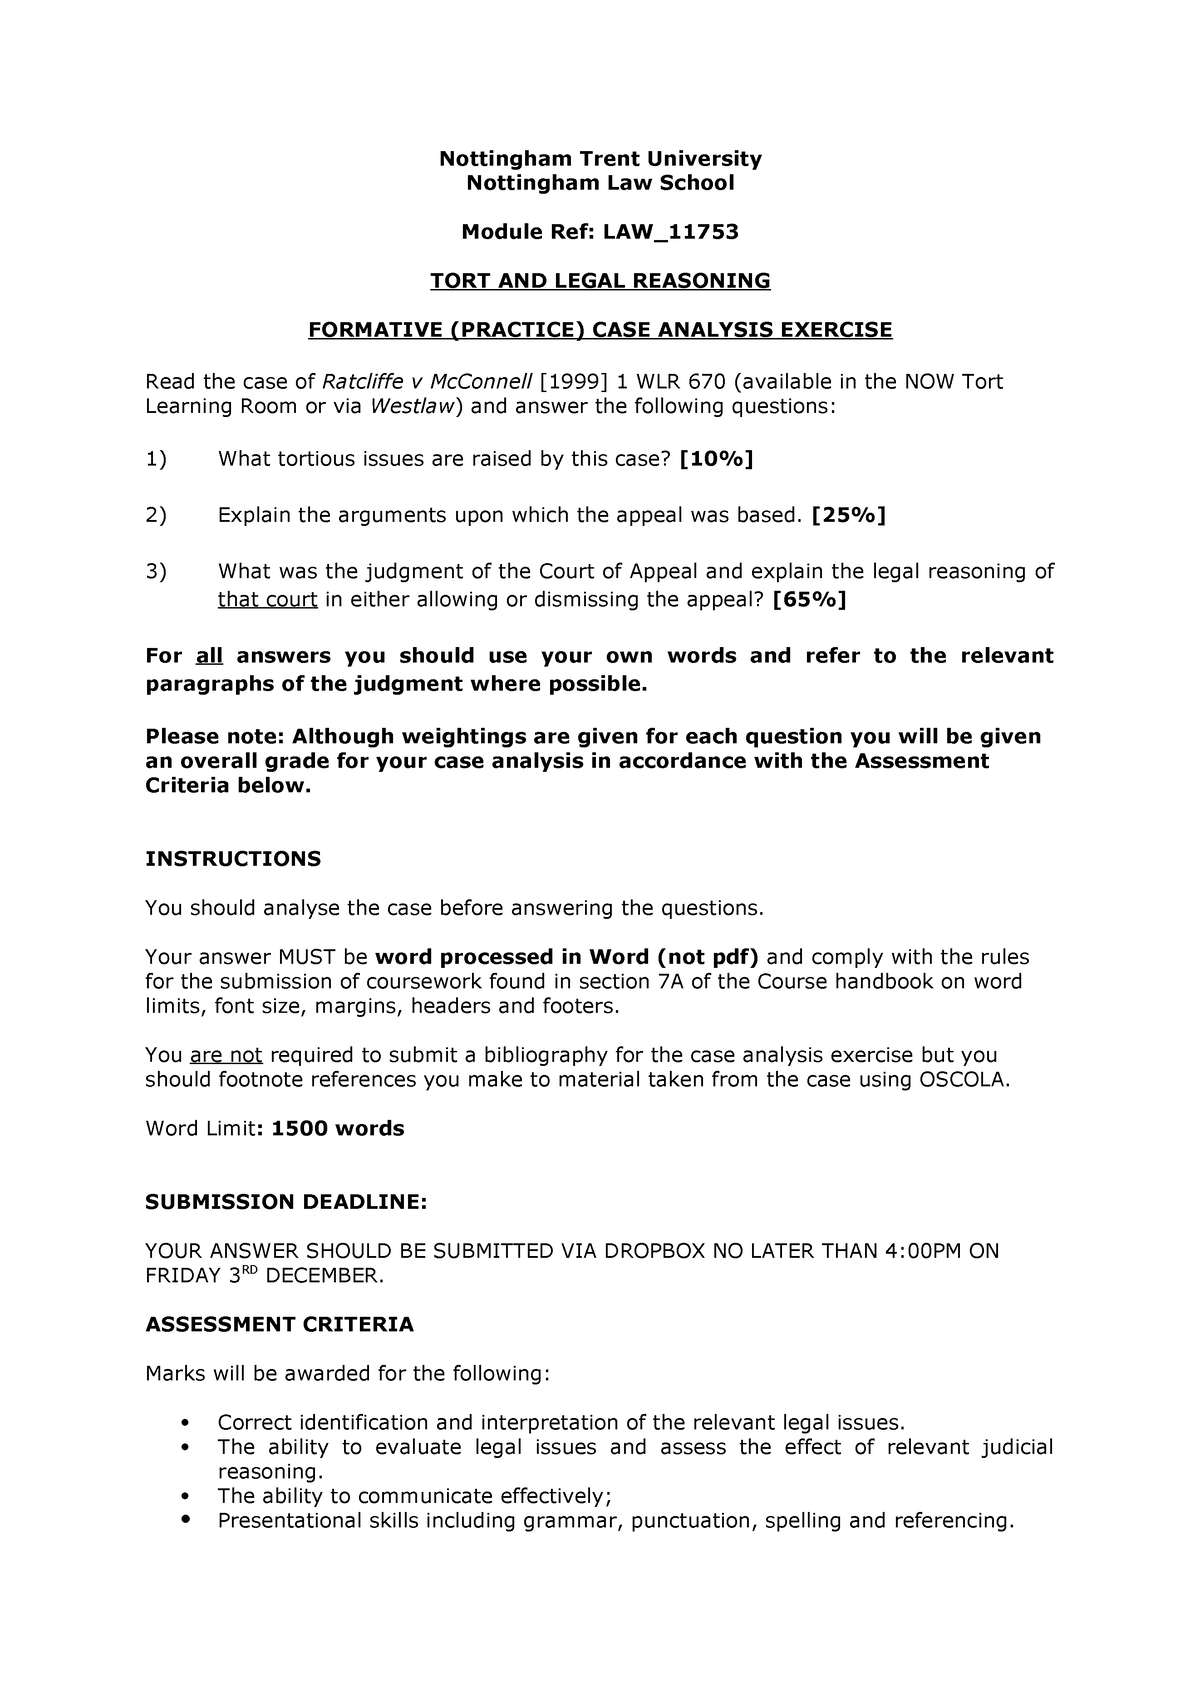 Tort Practice Case Analysis 2021-22 11753 - Nottingham Trent University ...